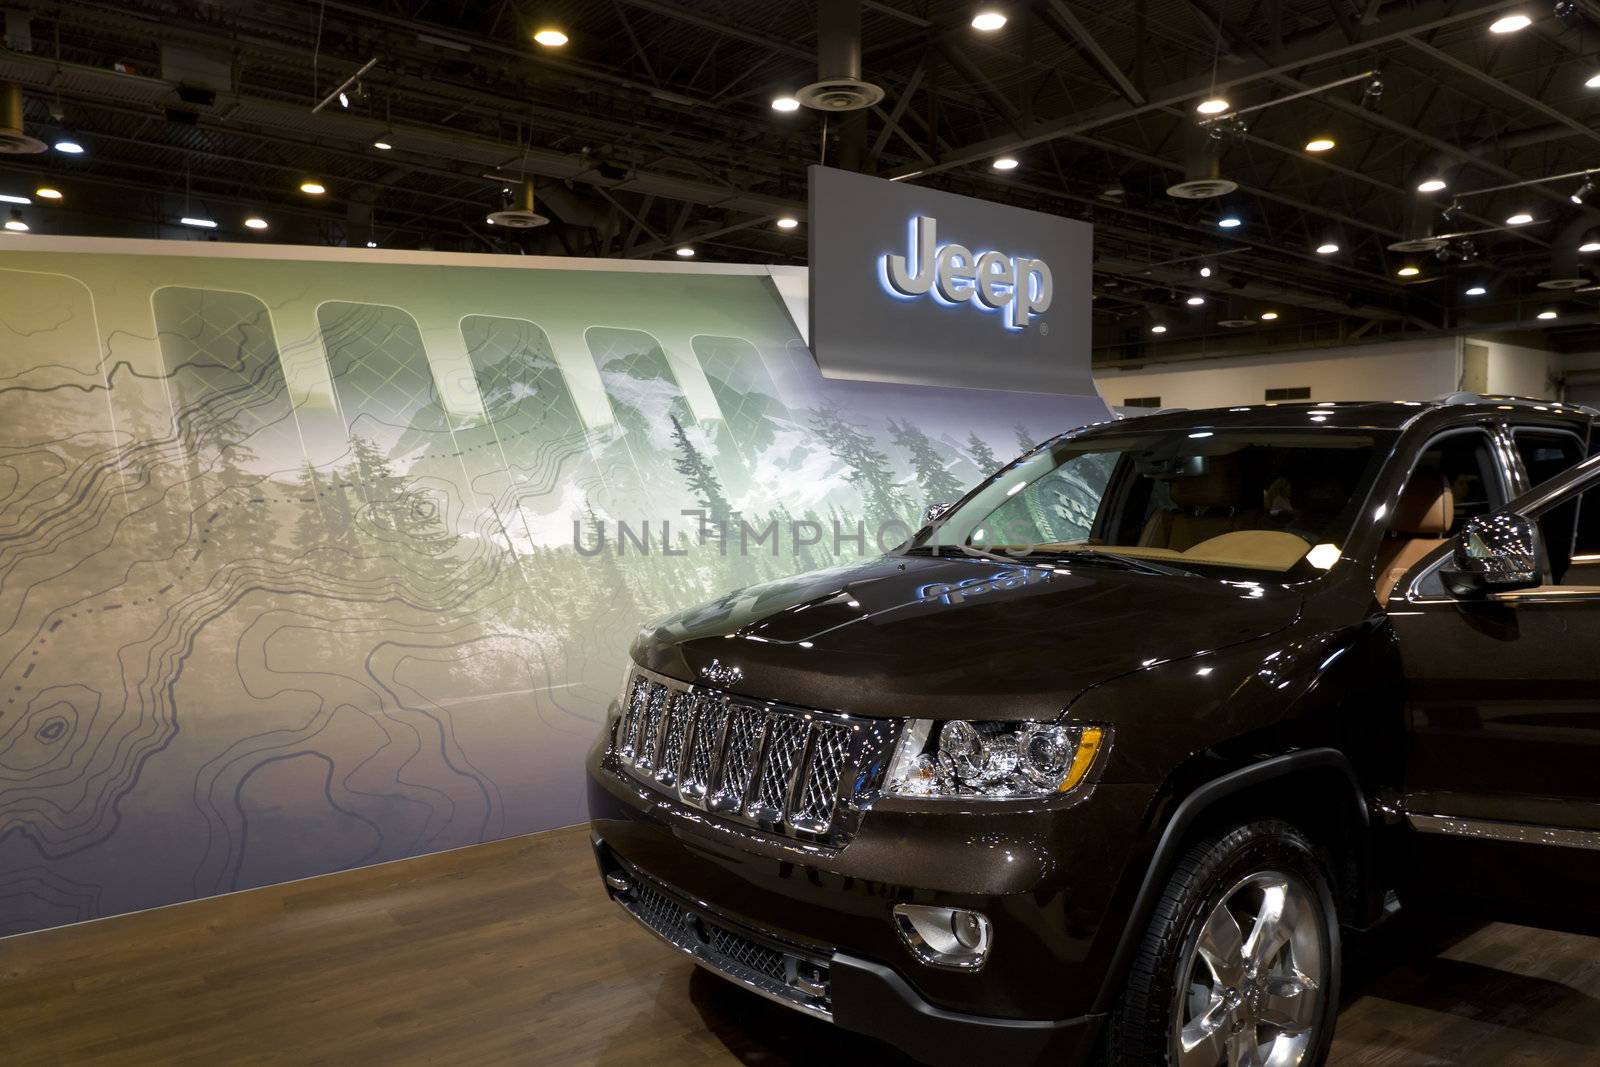 HOUSTON - JANUARY 2012: The Jeep Grand Cherokee at the Houston International Auto Show on January 28, 2012 in Houston, Texas.